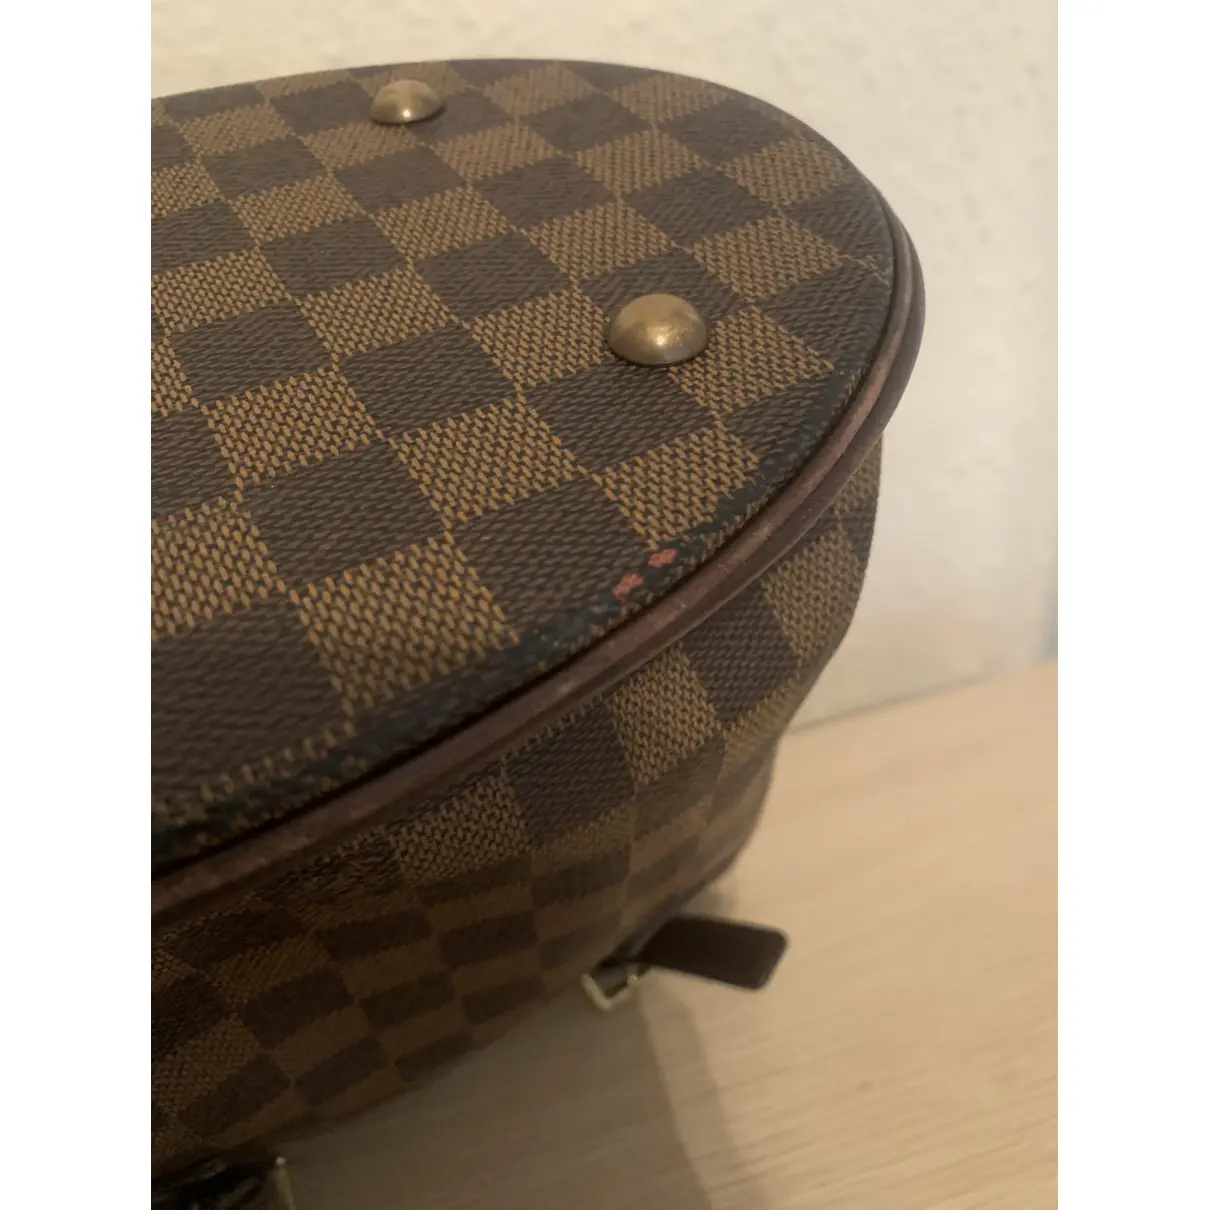 Bucket leather handbag Louis Vuitton - Vintage